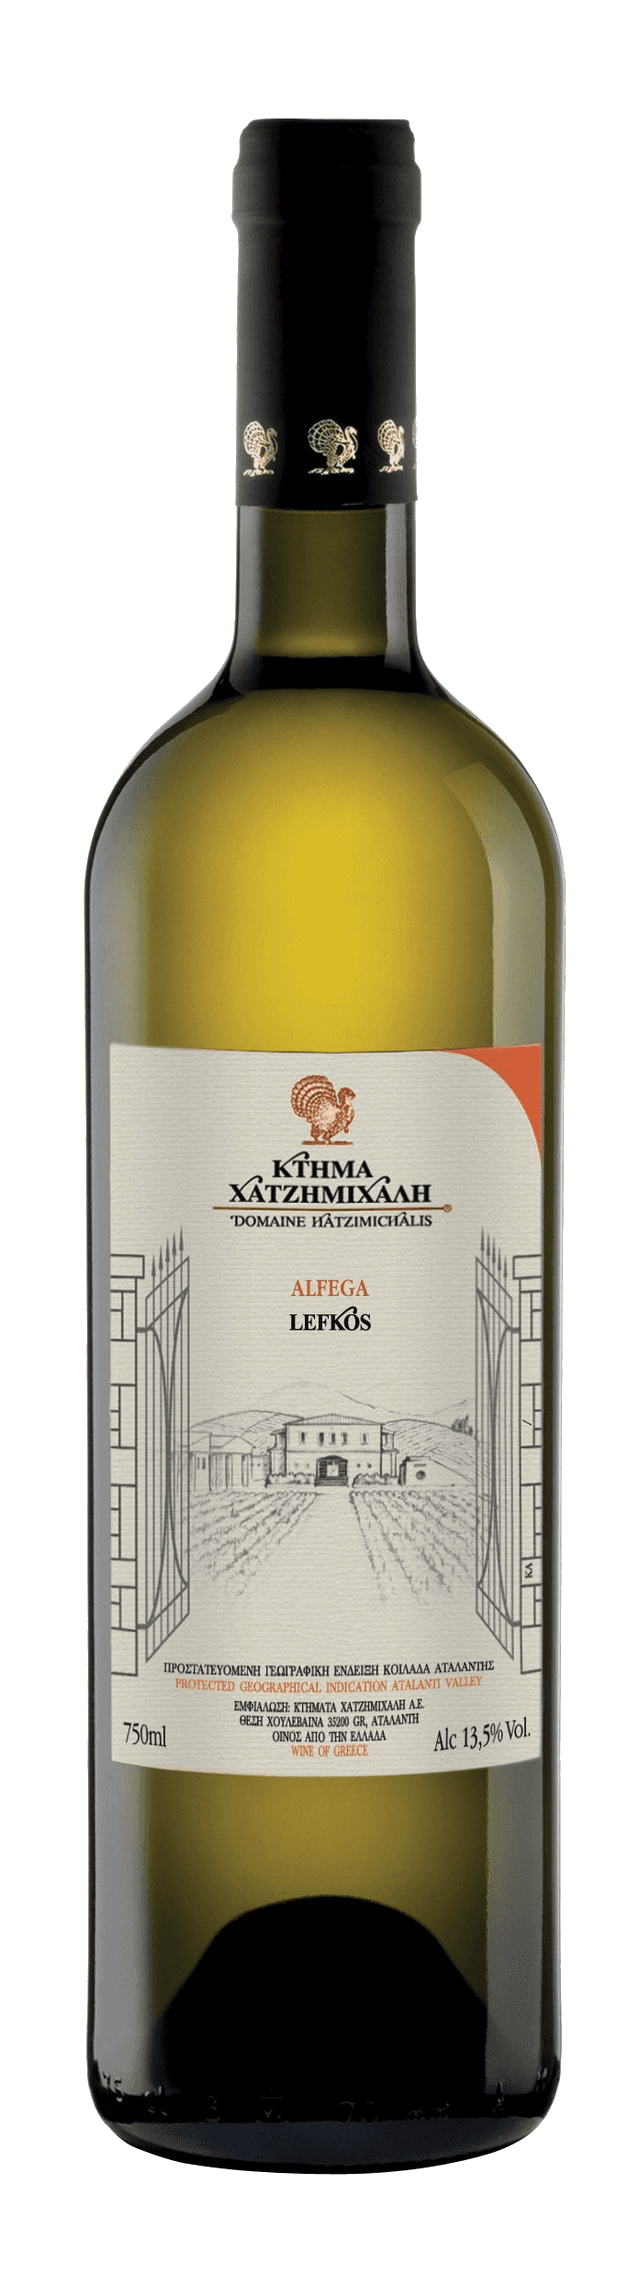 Hatzimichalis Ktima Weiss Lefkos ( Le Blanc ) | Weinversand Shop-Kreta ~  Ouzo, Metaxa, Weine, Olivenöl